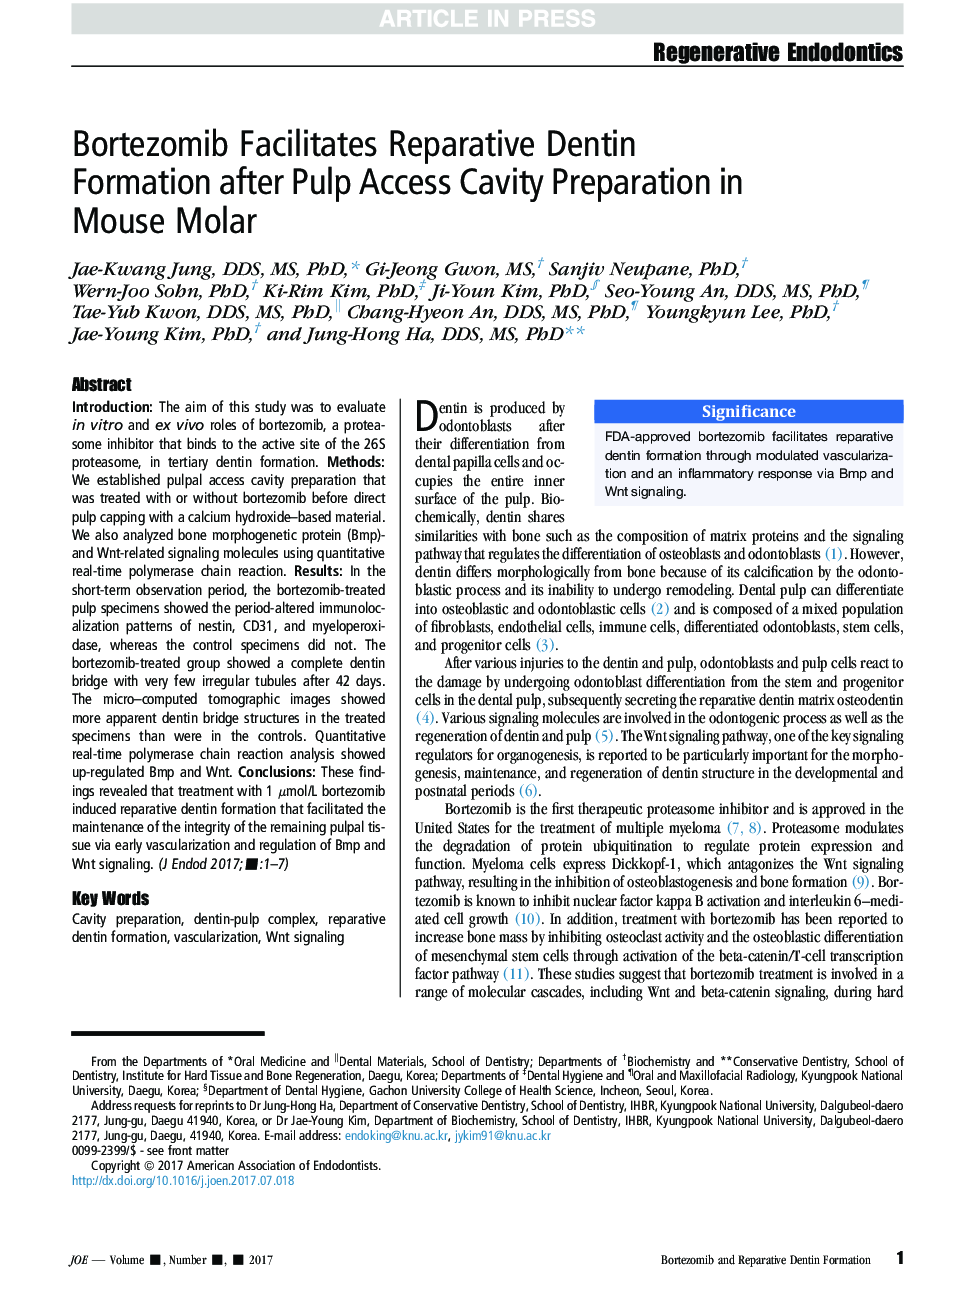 Bortezomib Facilitates Reparative Dentin Formation after Pulp Access Cavity Preparation in Mouse Molar